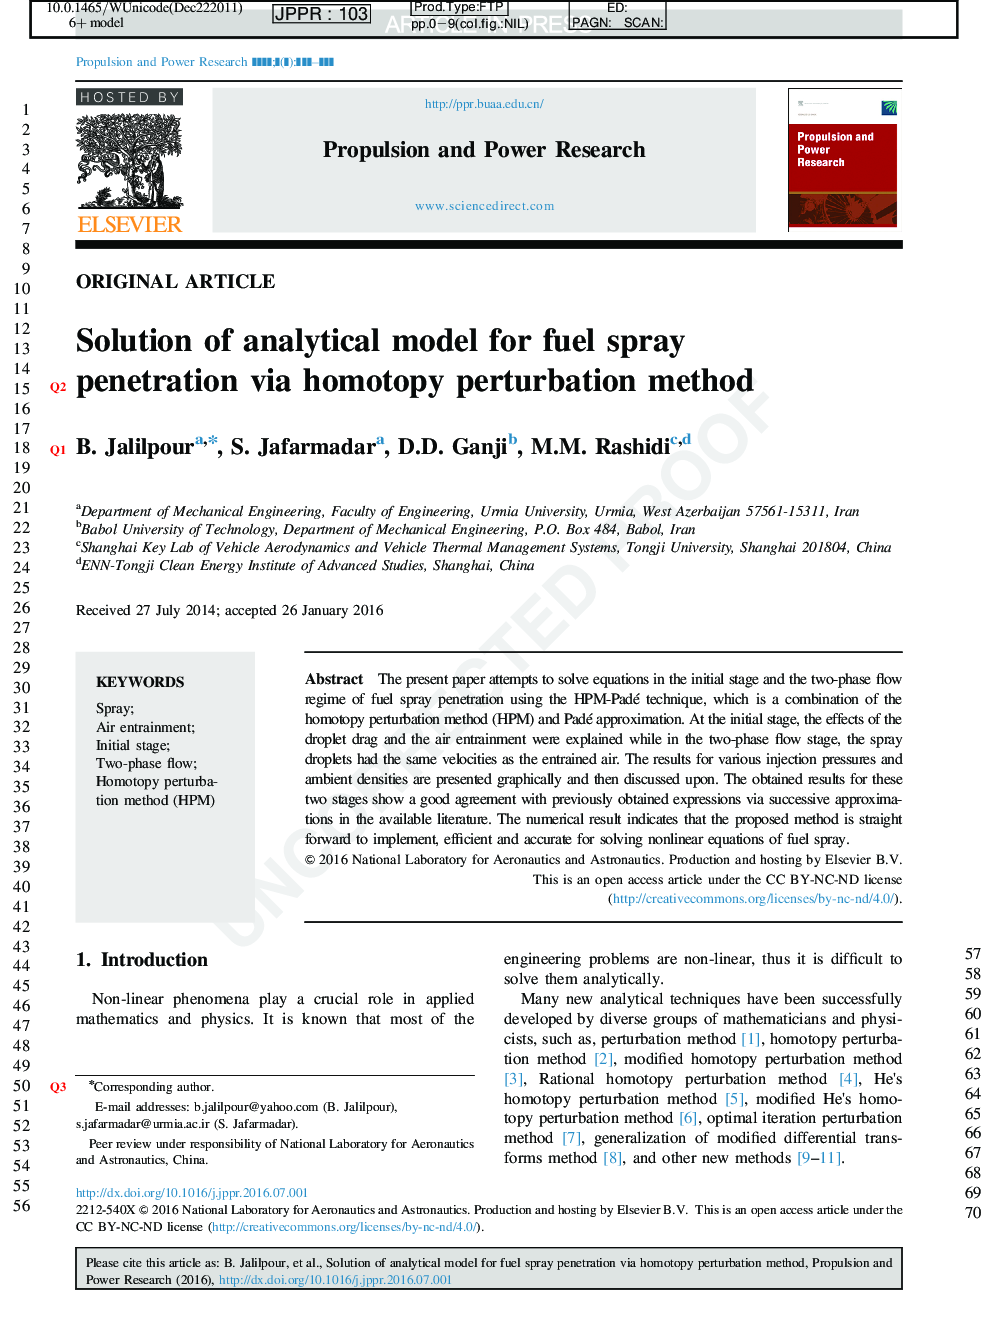 Solution of analytical model for fuel spray penetration via homotopy perturbation method